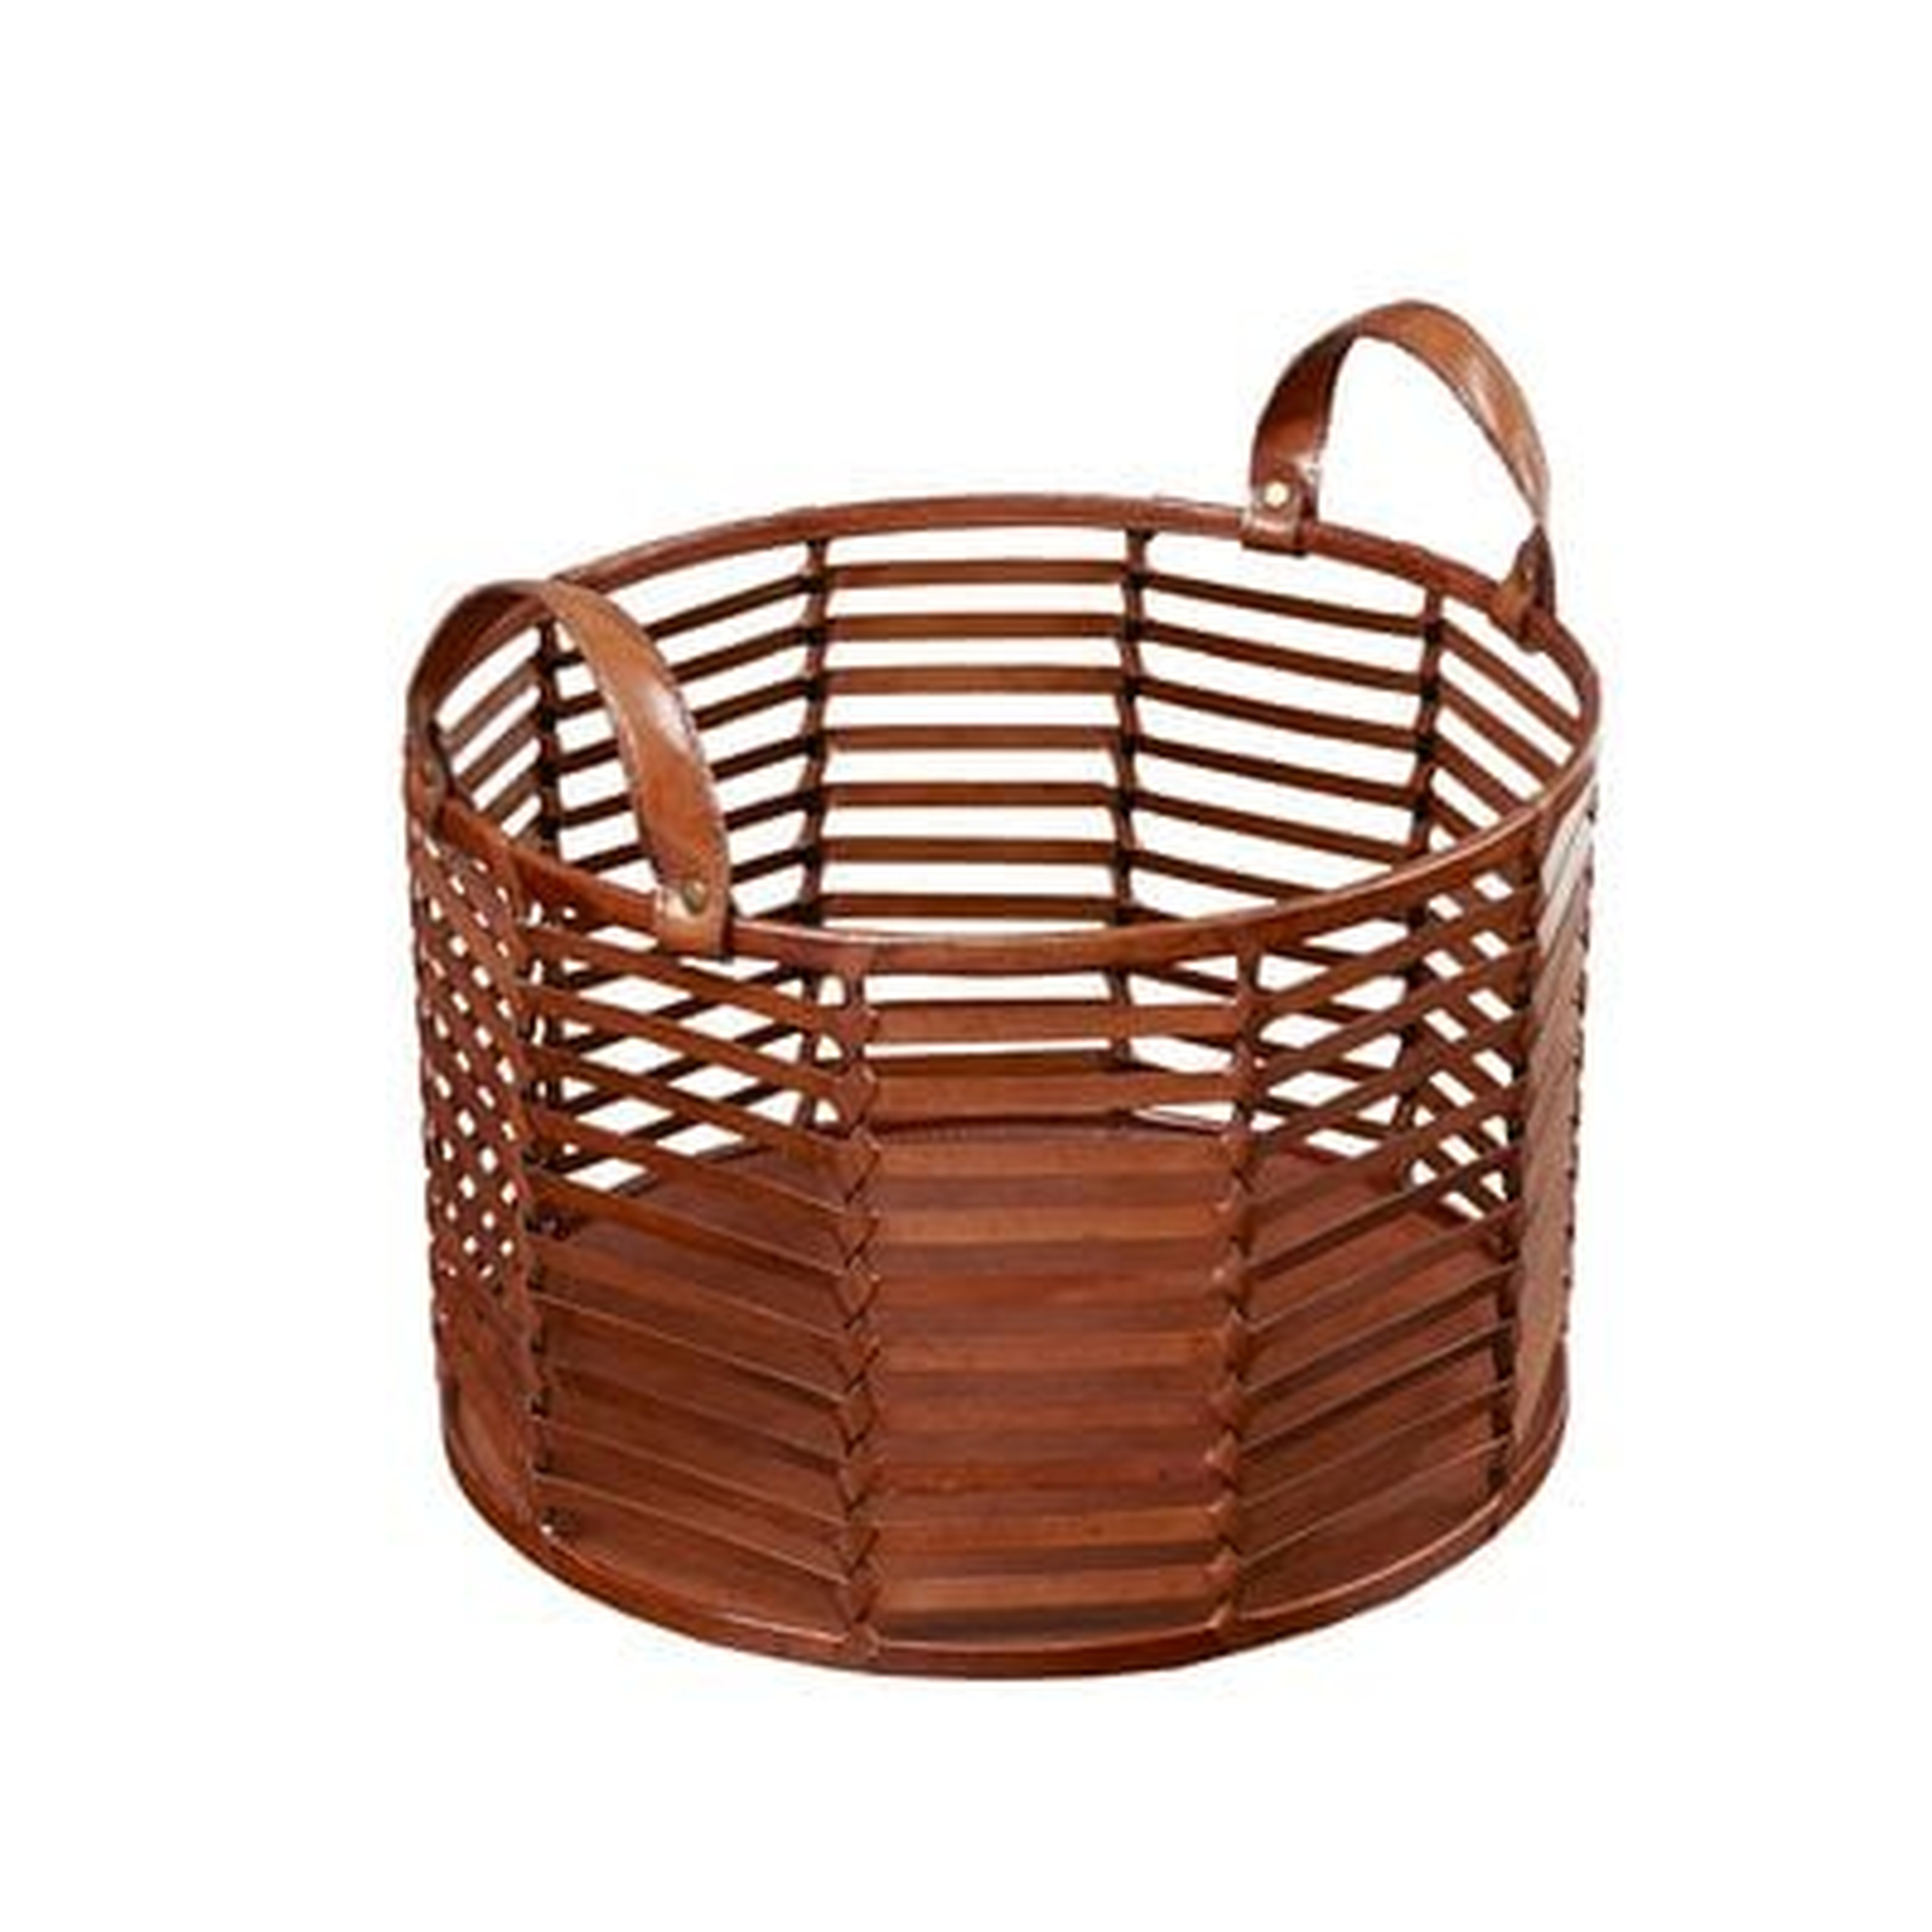 Newport Stripe Leather Basket - Wayfair